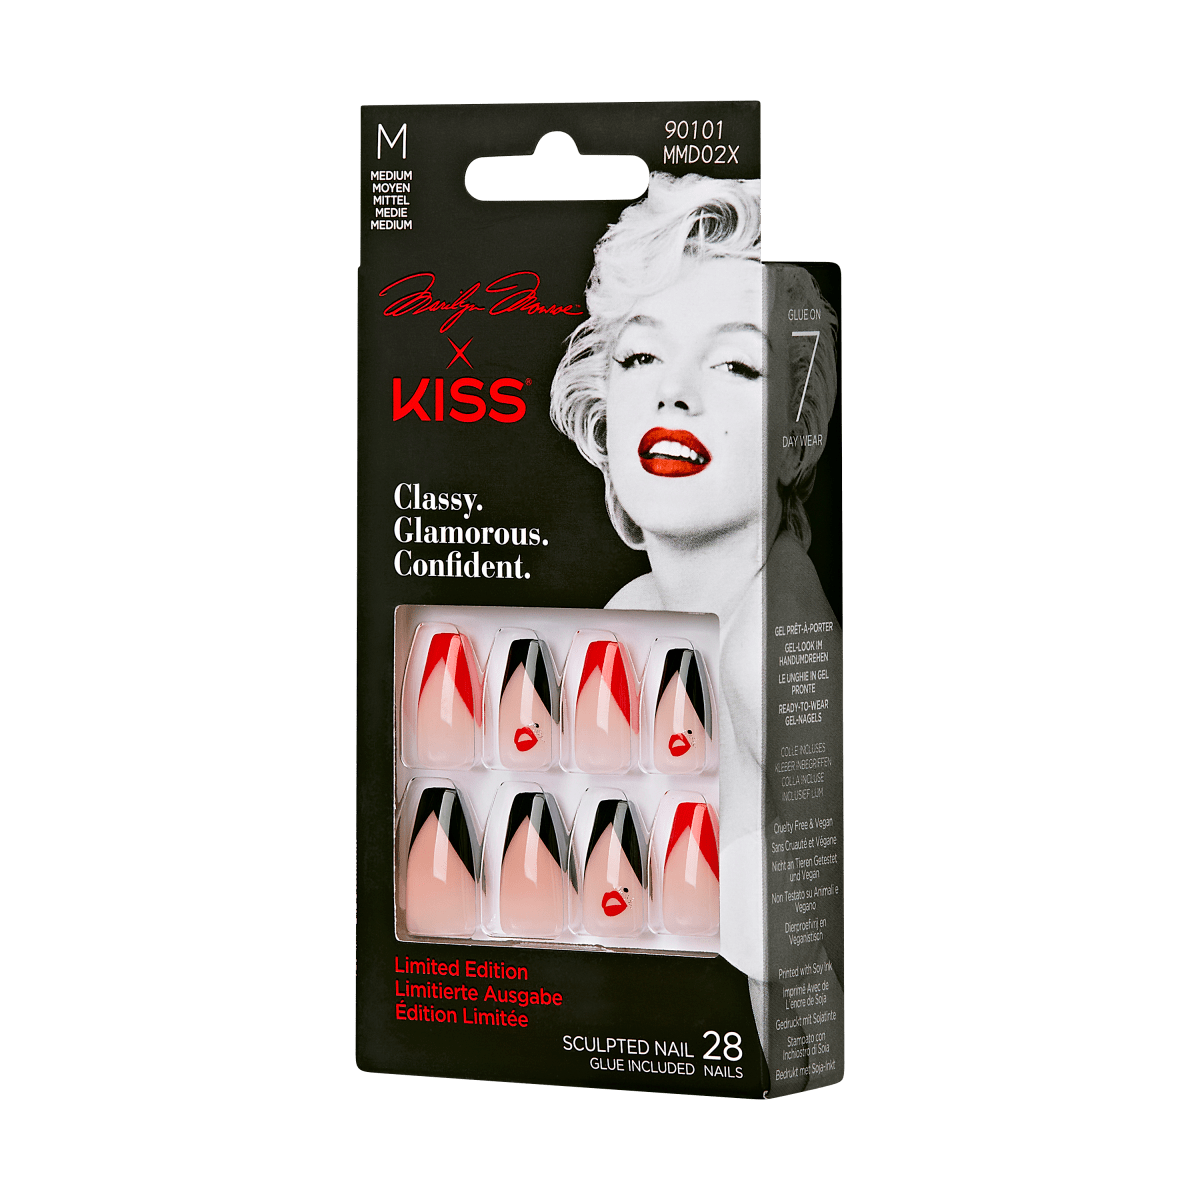 Marilyn Monroe x KISS Limited Edition Nails - Legendary